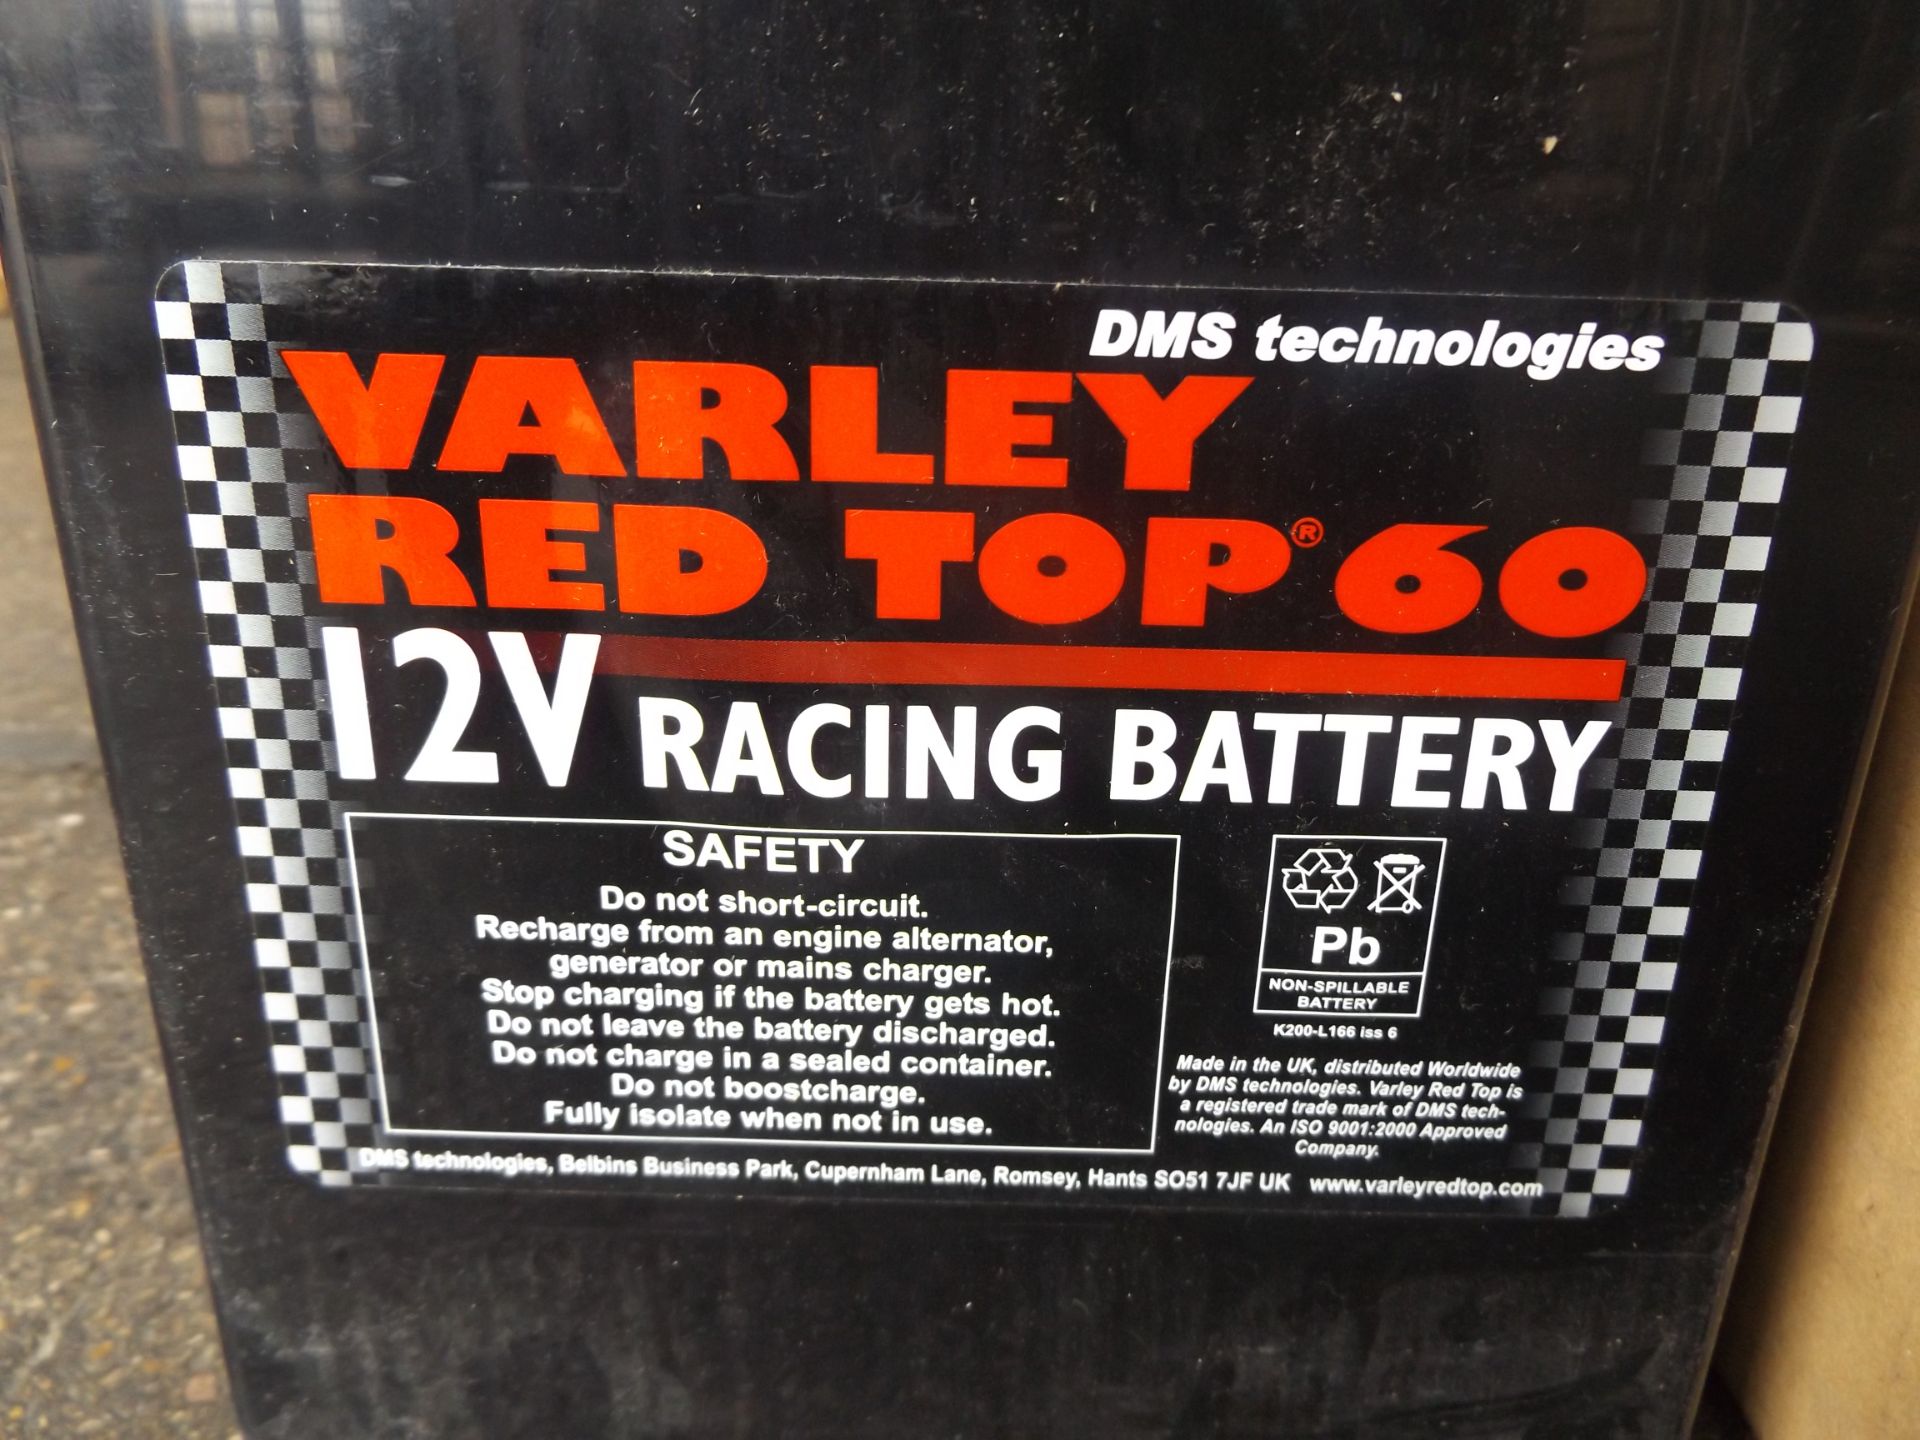 2 x Varley Red Top 60 12V Racing Batteries - Image 2 of 4